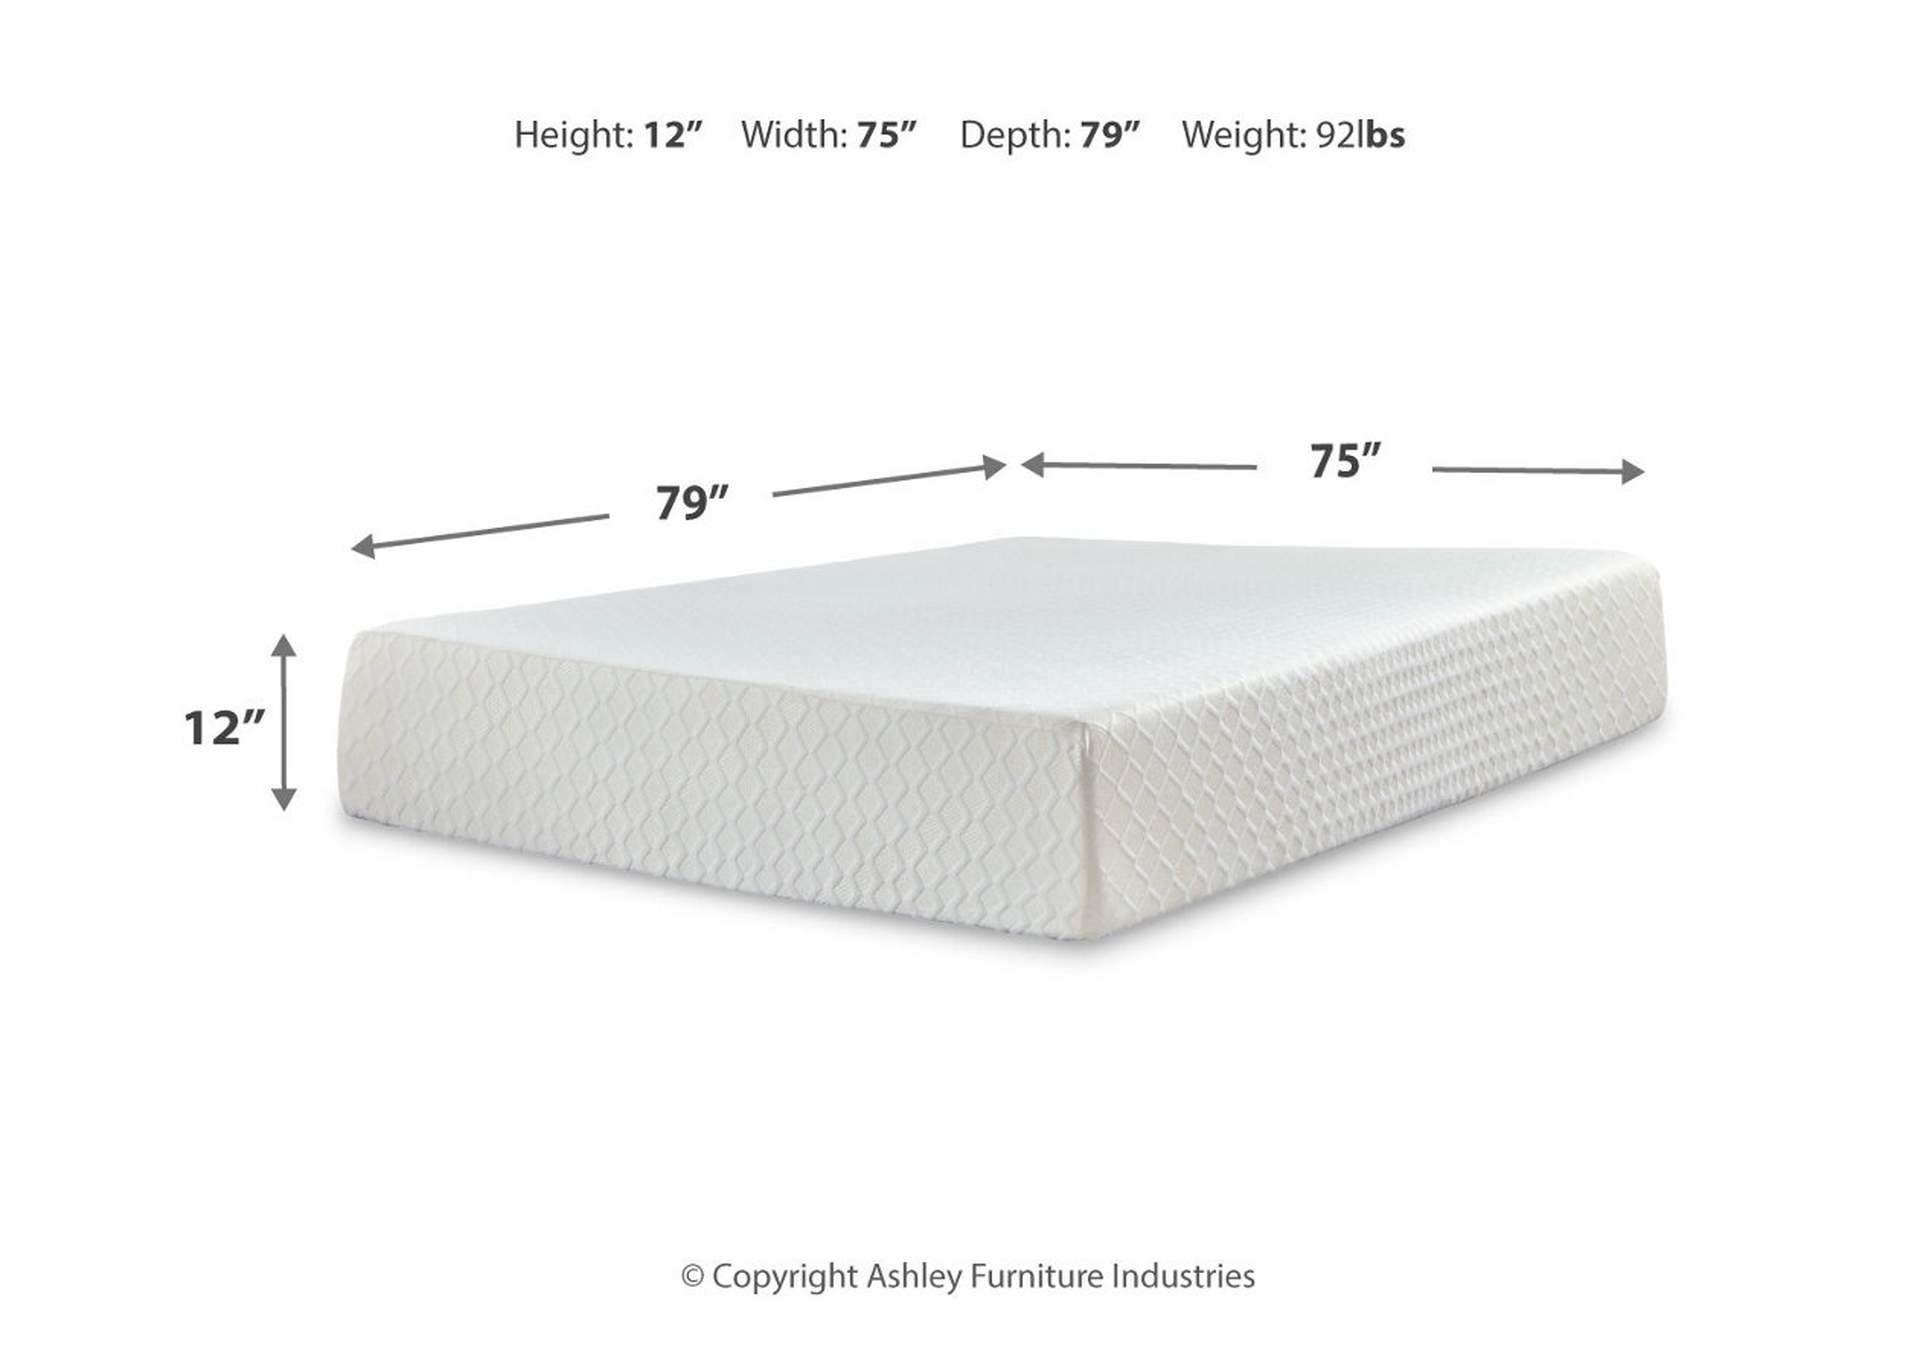 Chime 12 Inch Memory Foam Mattress with Adjustable Base,Sierra Sleep by Ashley